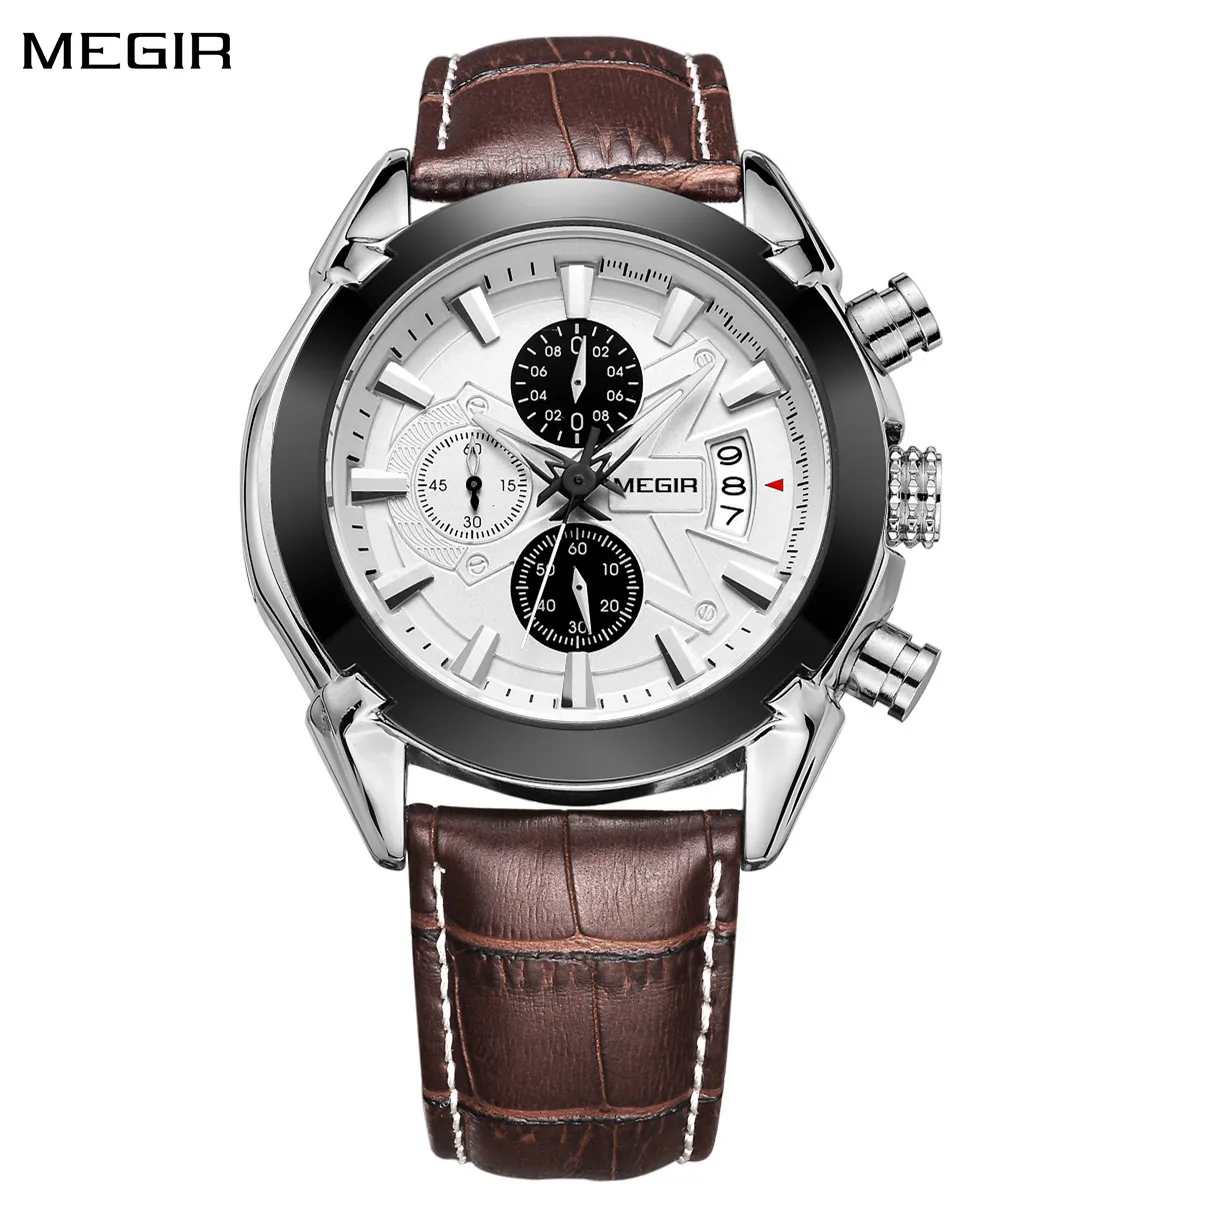 

MEGIR Men Watches Original Fashion Leather Quartz Wristwatch Top Brand Military Chronograph Big Dial Sports Clock Reloj Hombre